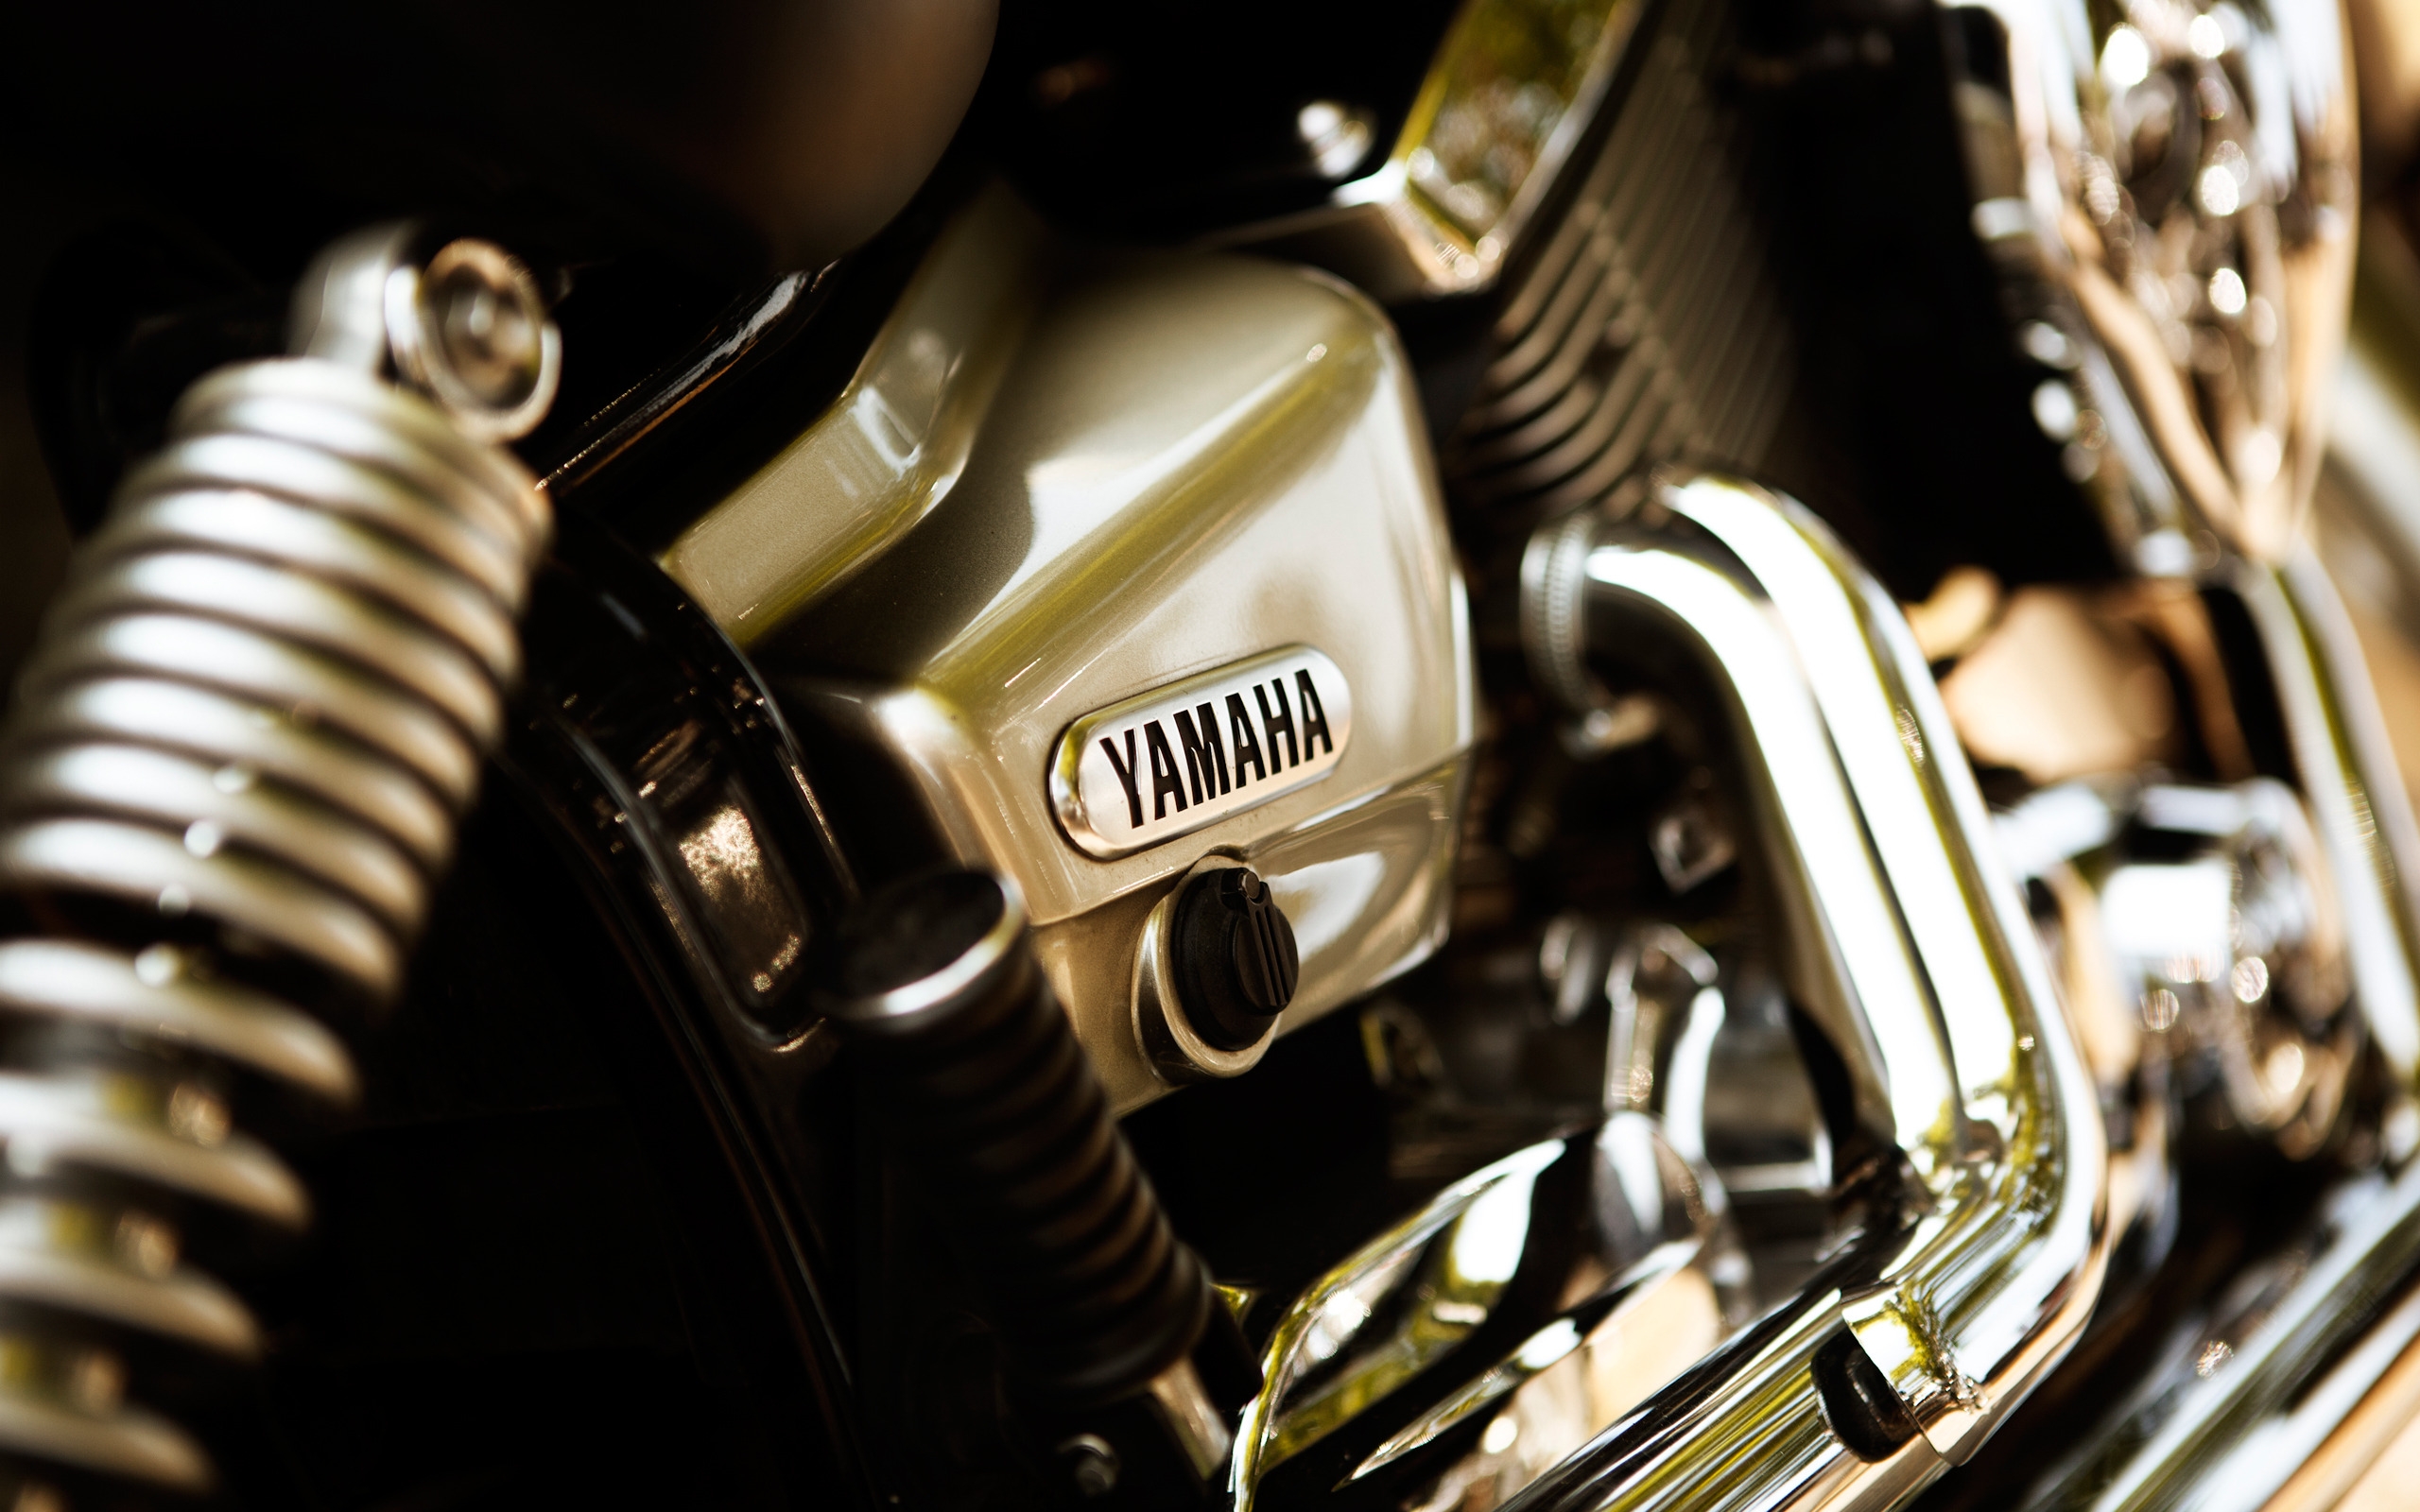 Yamaha bike Close-Up for 2560 x 1600 widescreen resolution